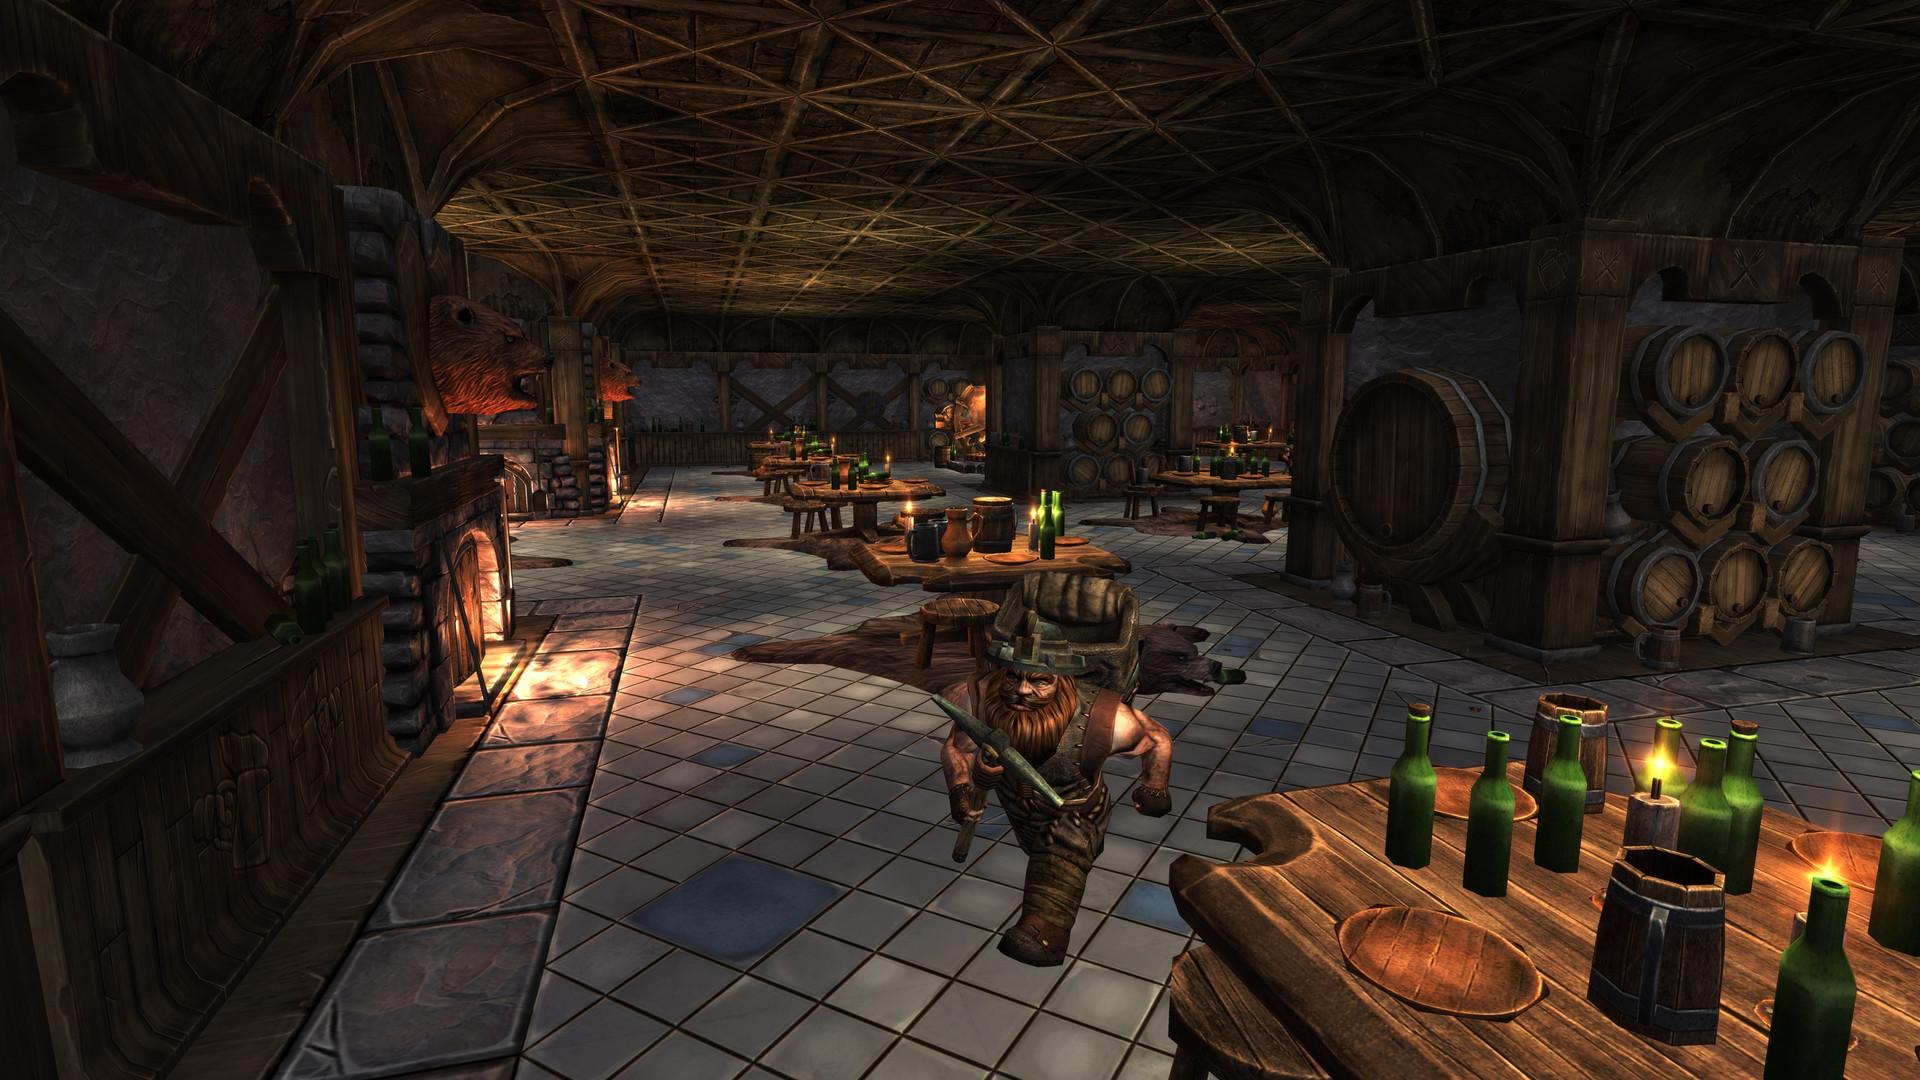 Screenshot №9 from game War for the Overworld